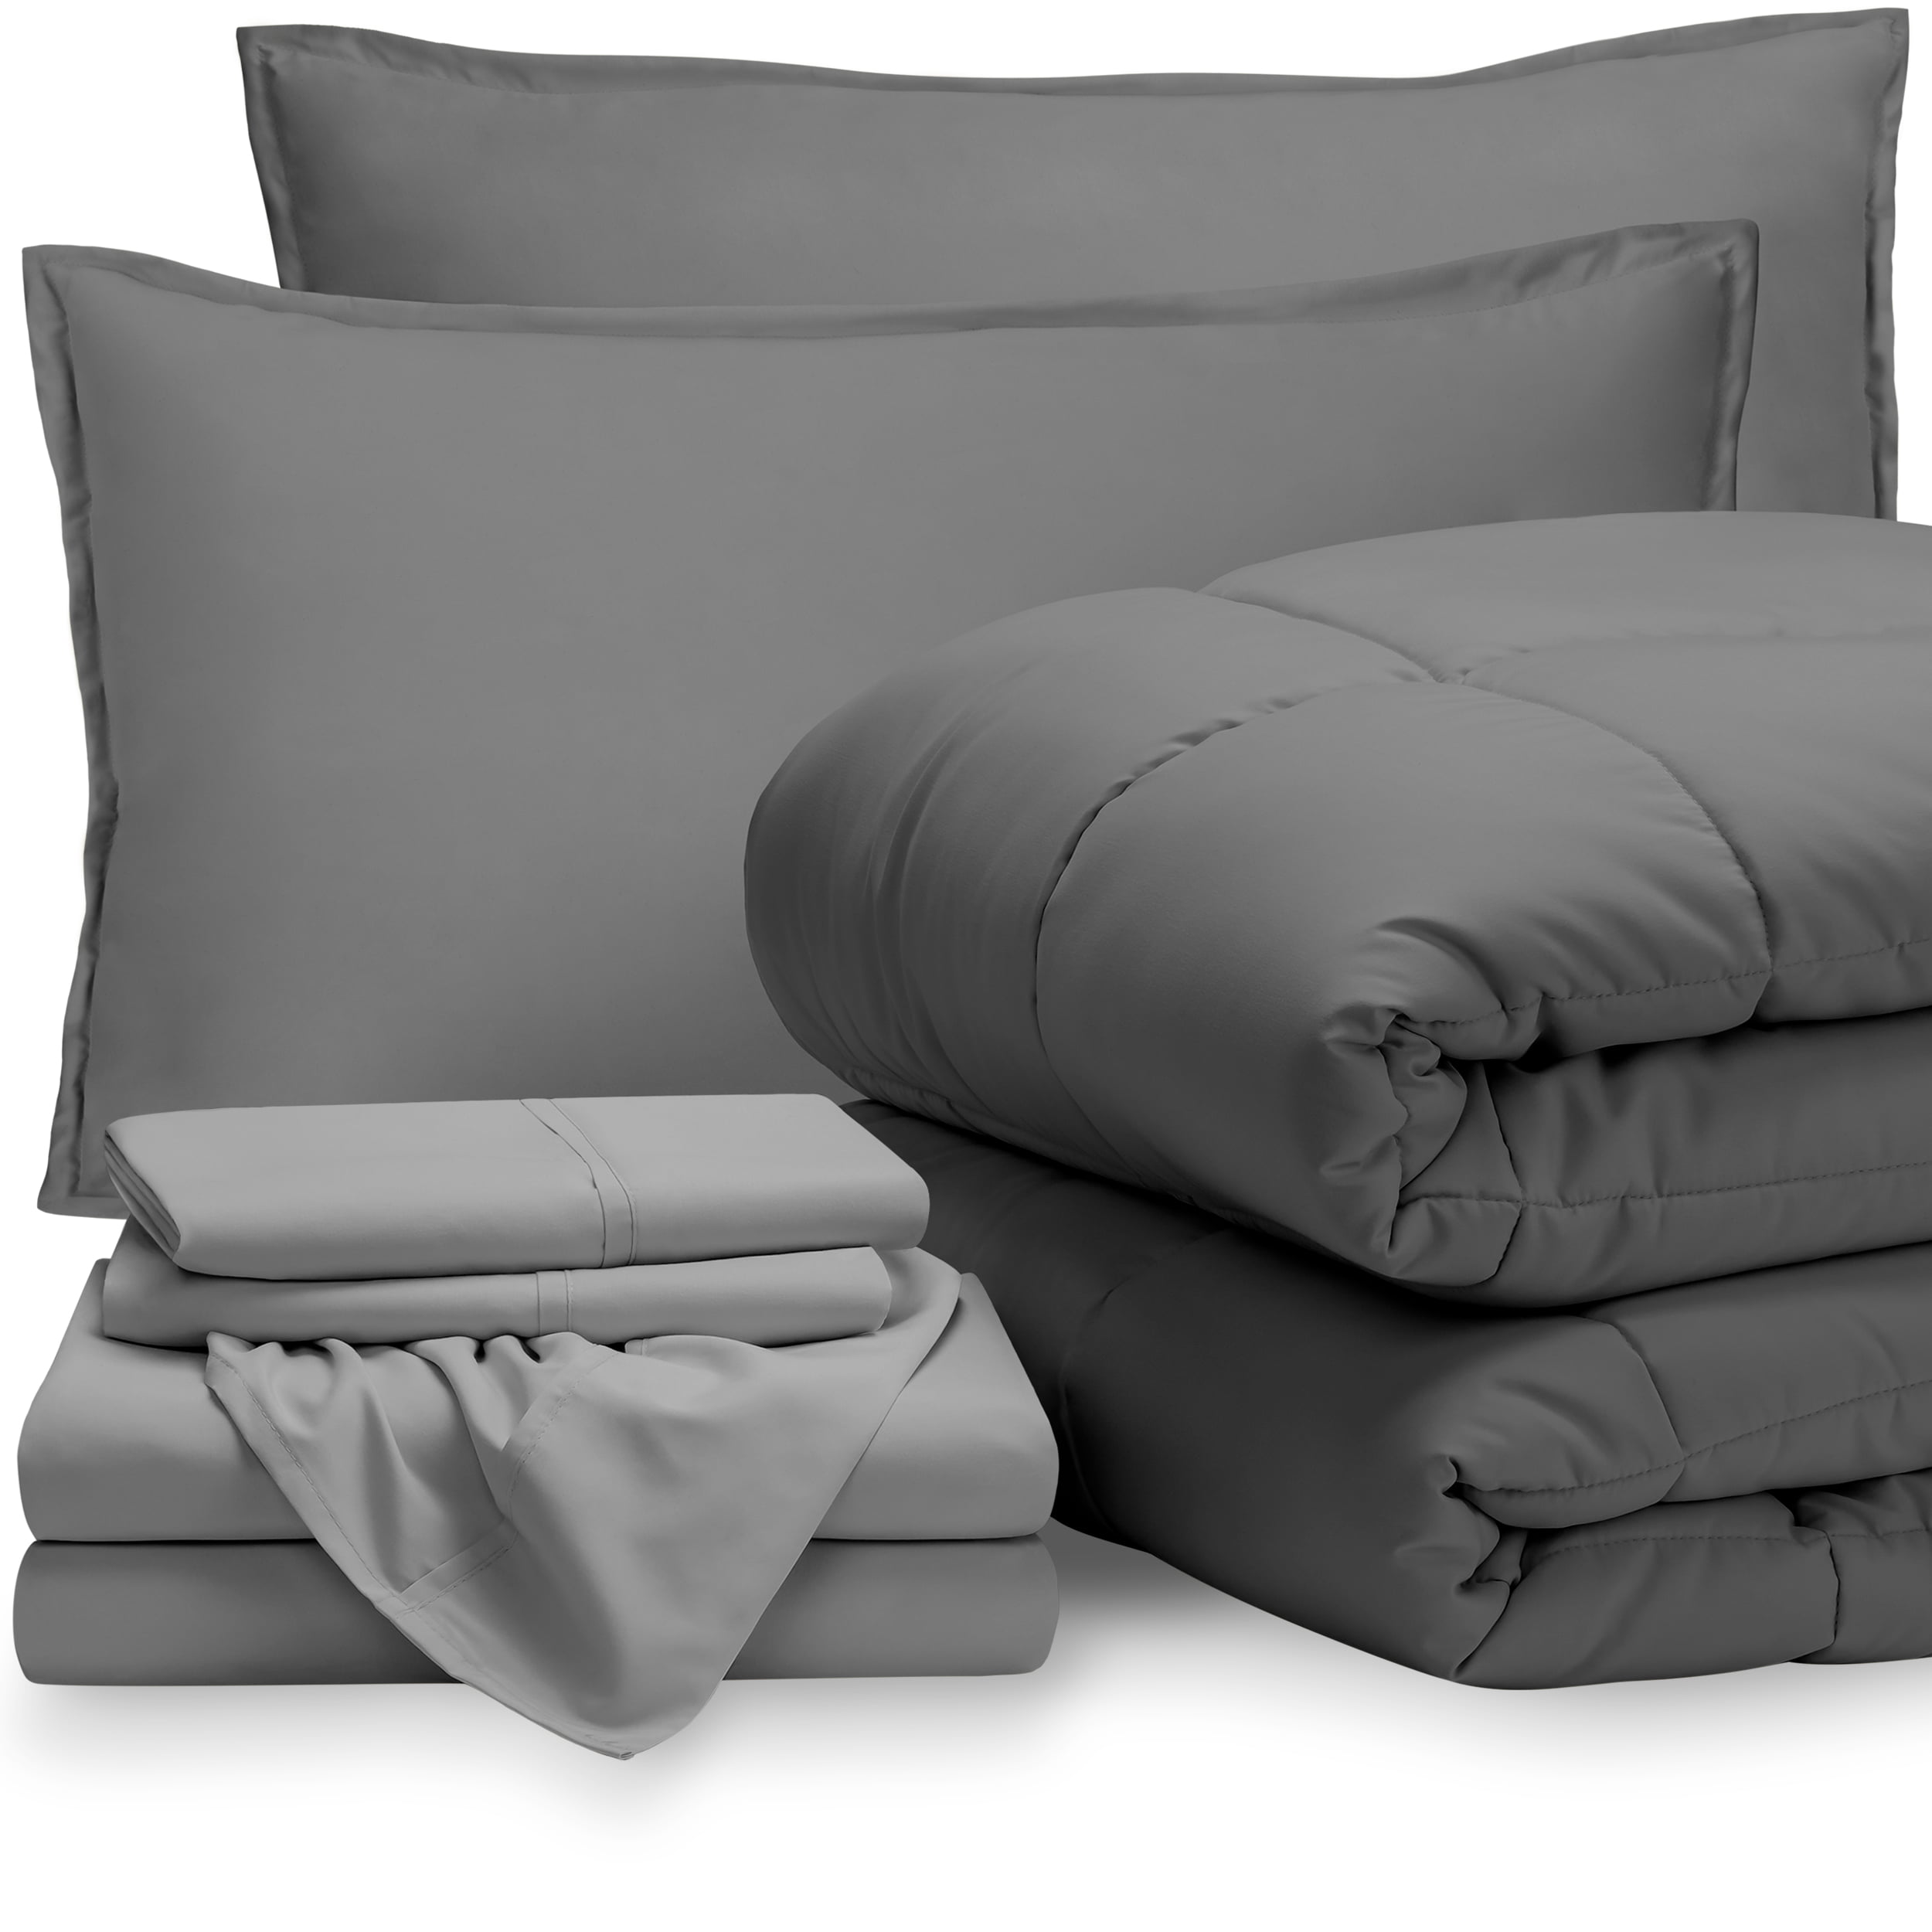 Premium 1800 Ultra-Soft Microfiber Set of 2 Bed Pillow Shams King Pillow Sham Set of 2, Sand Bare Home King Pillow Shams Double Brushed